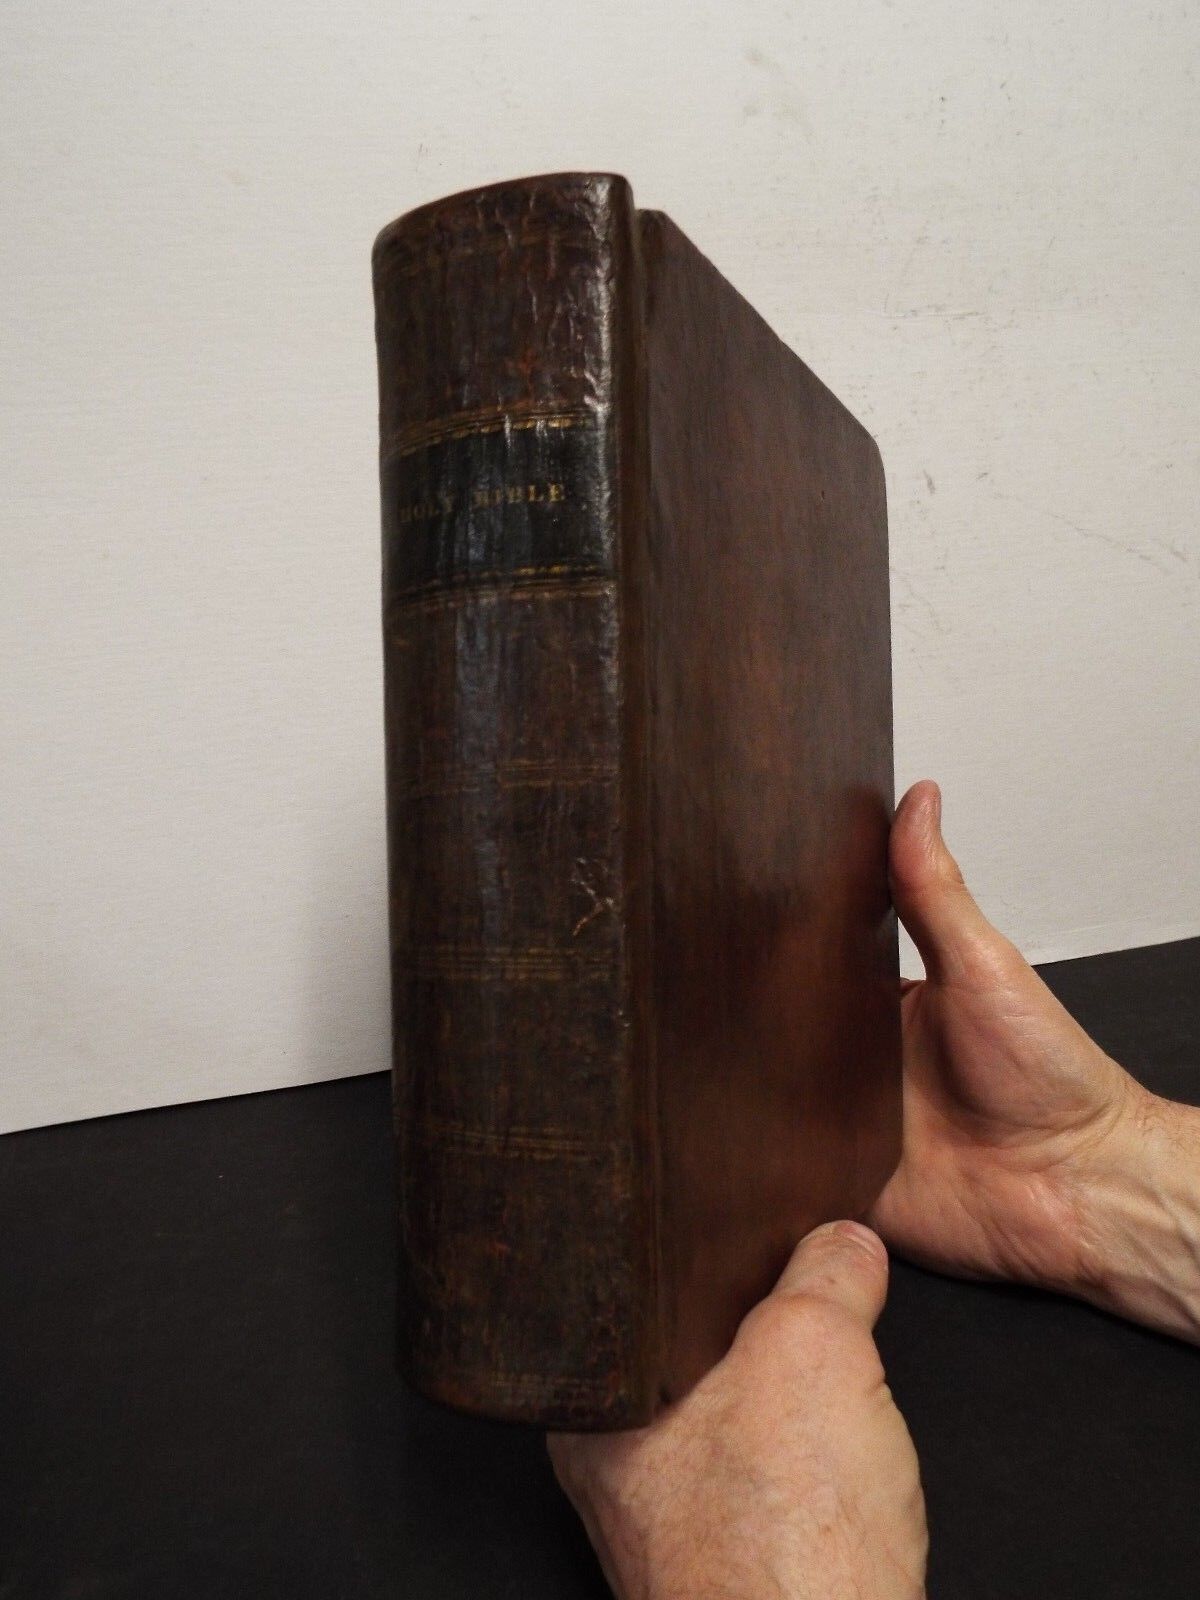 1726 Gilbert Tennent\'s Bible - Great Awakening -Princeton University-co- founder